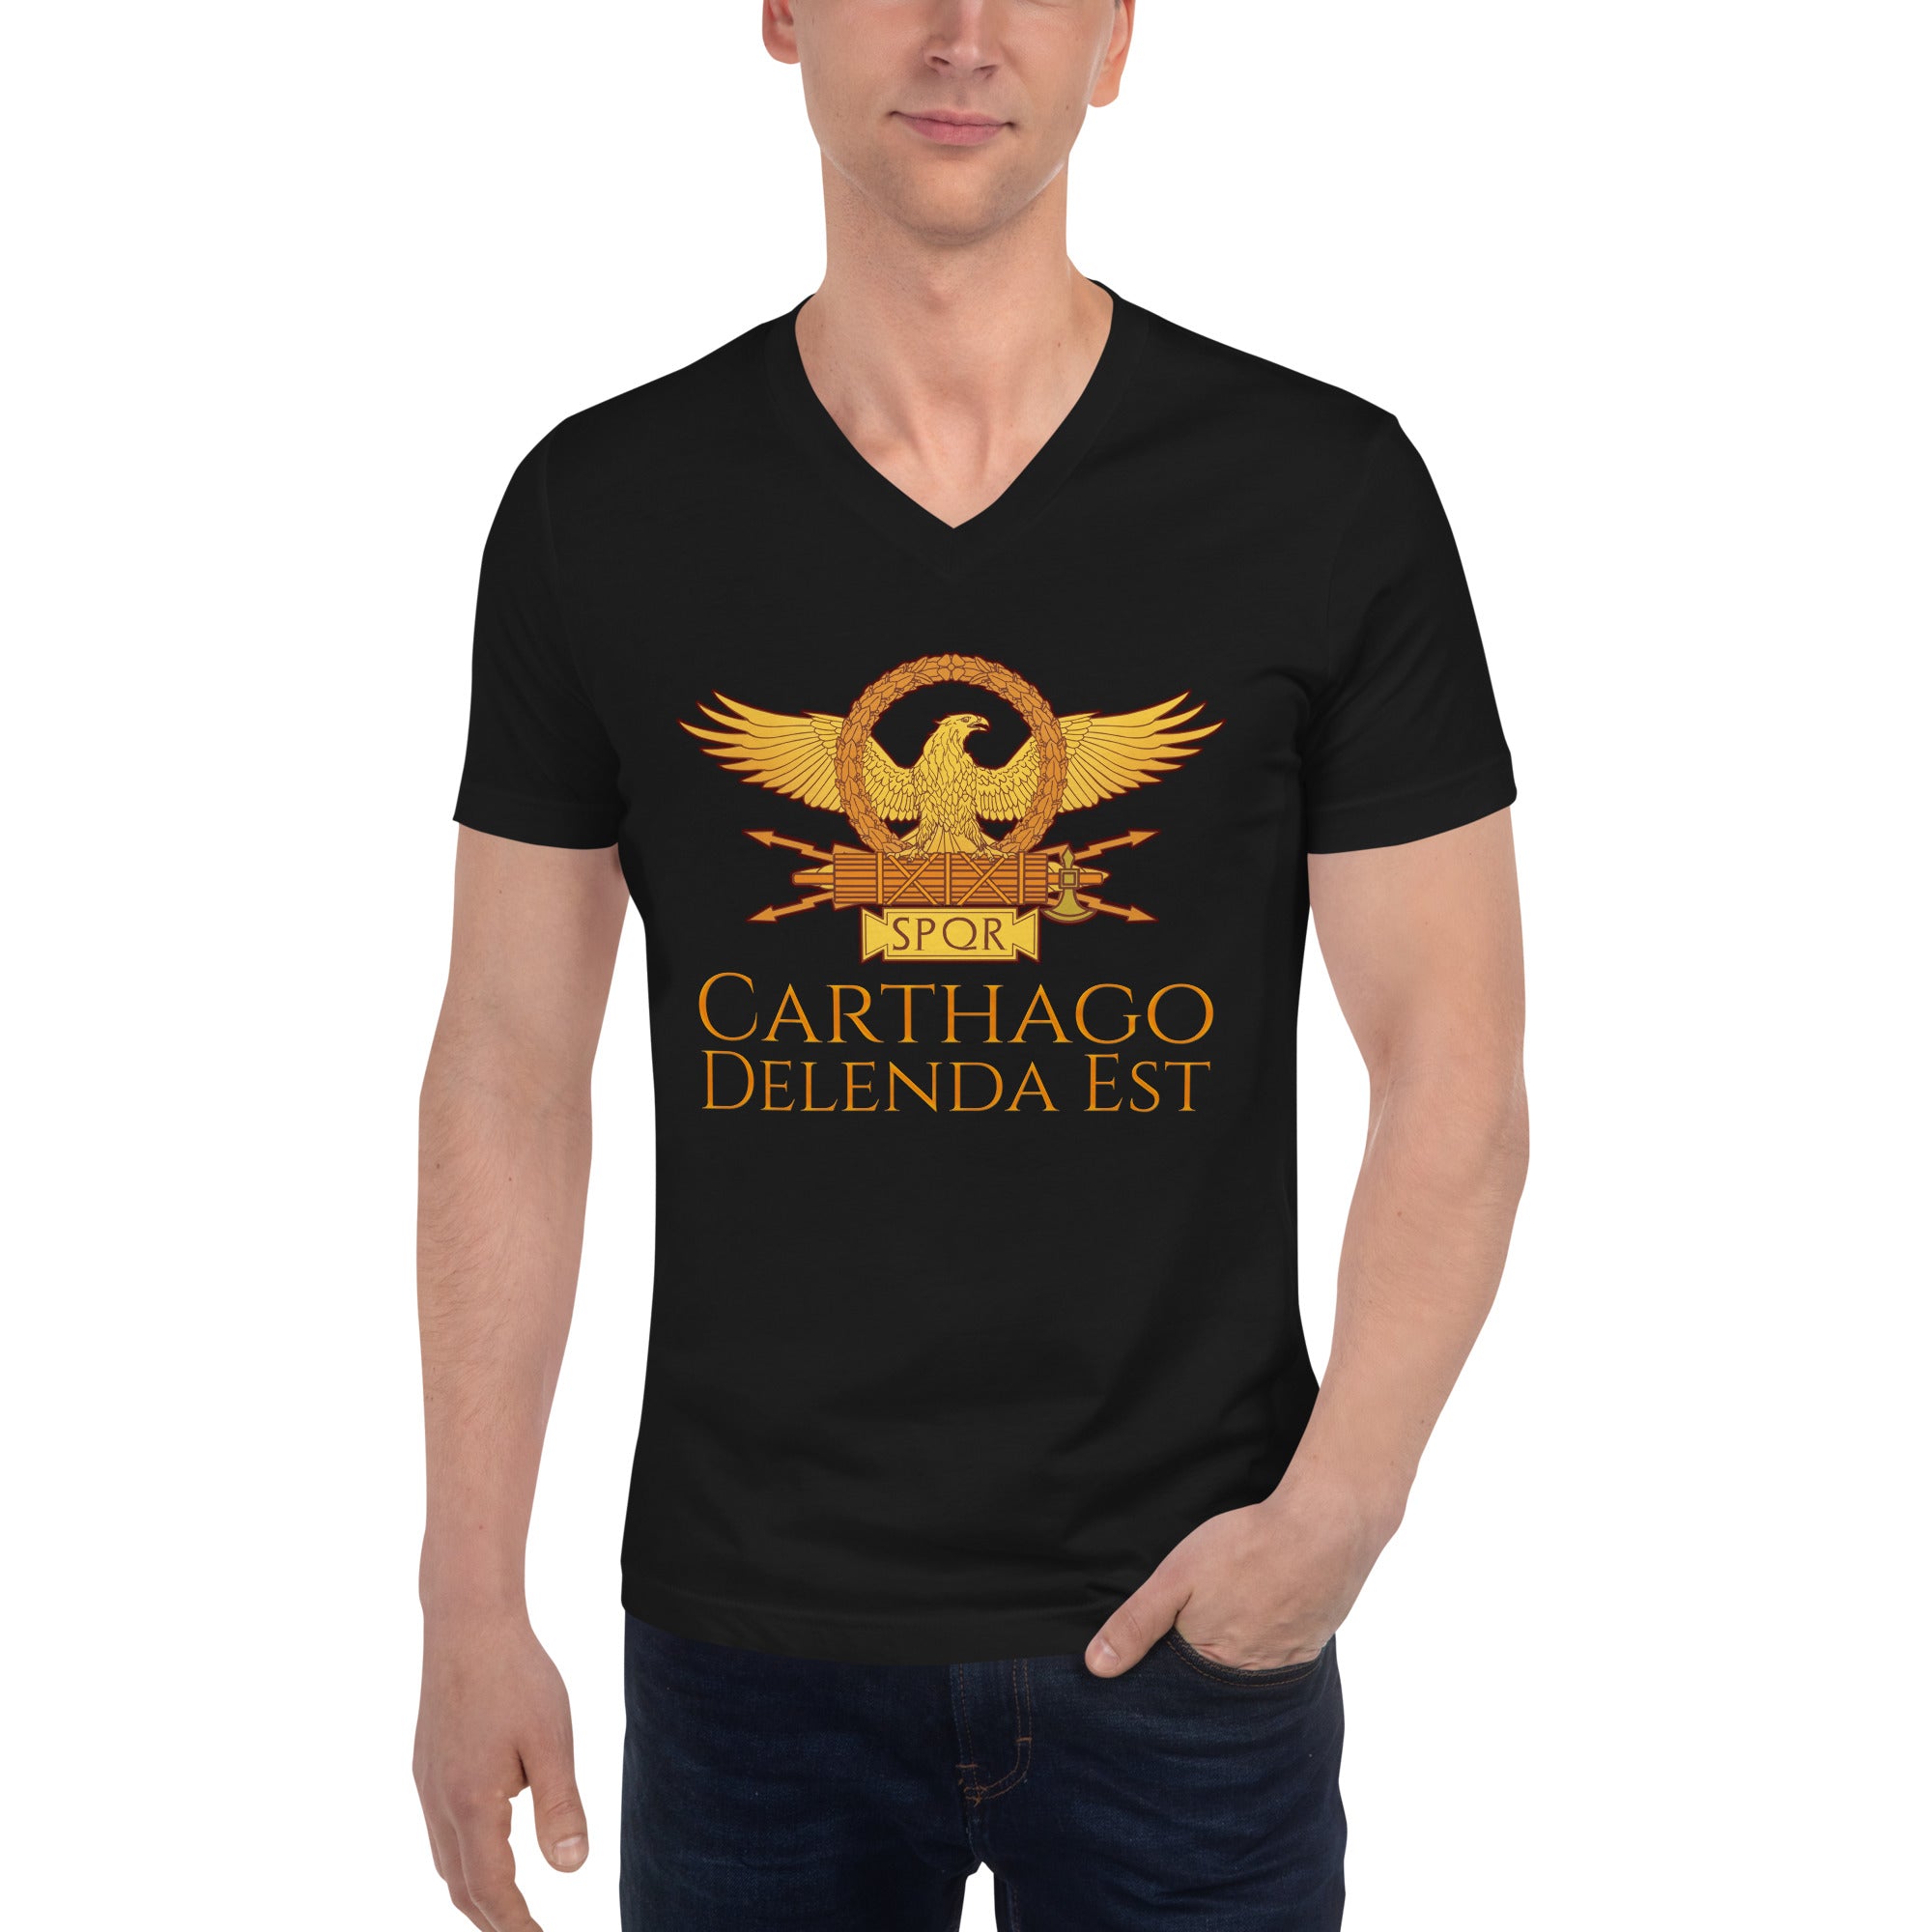 Carthago Delenda Est - Ancient Rome - Unisex Short Sleeve V-Neck T-Shirt